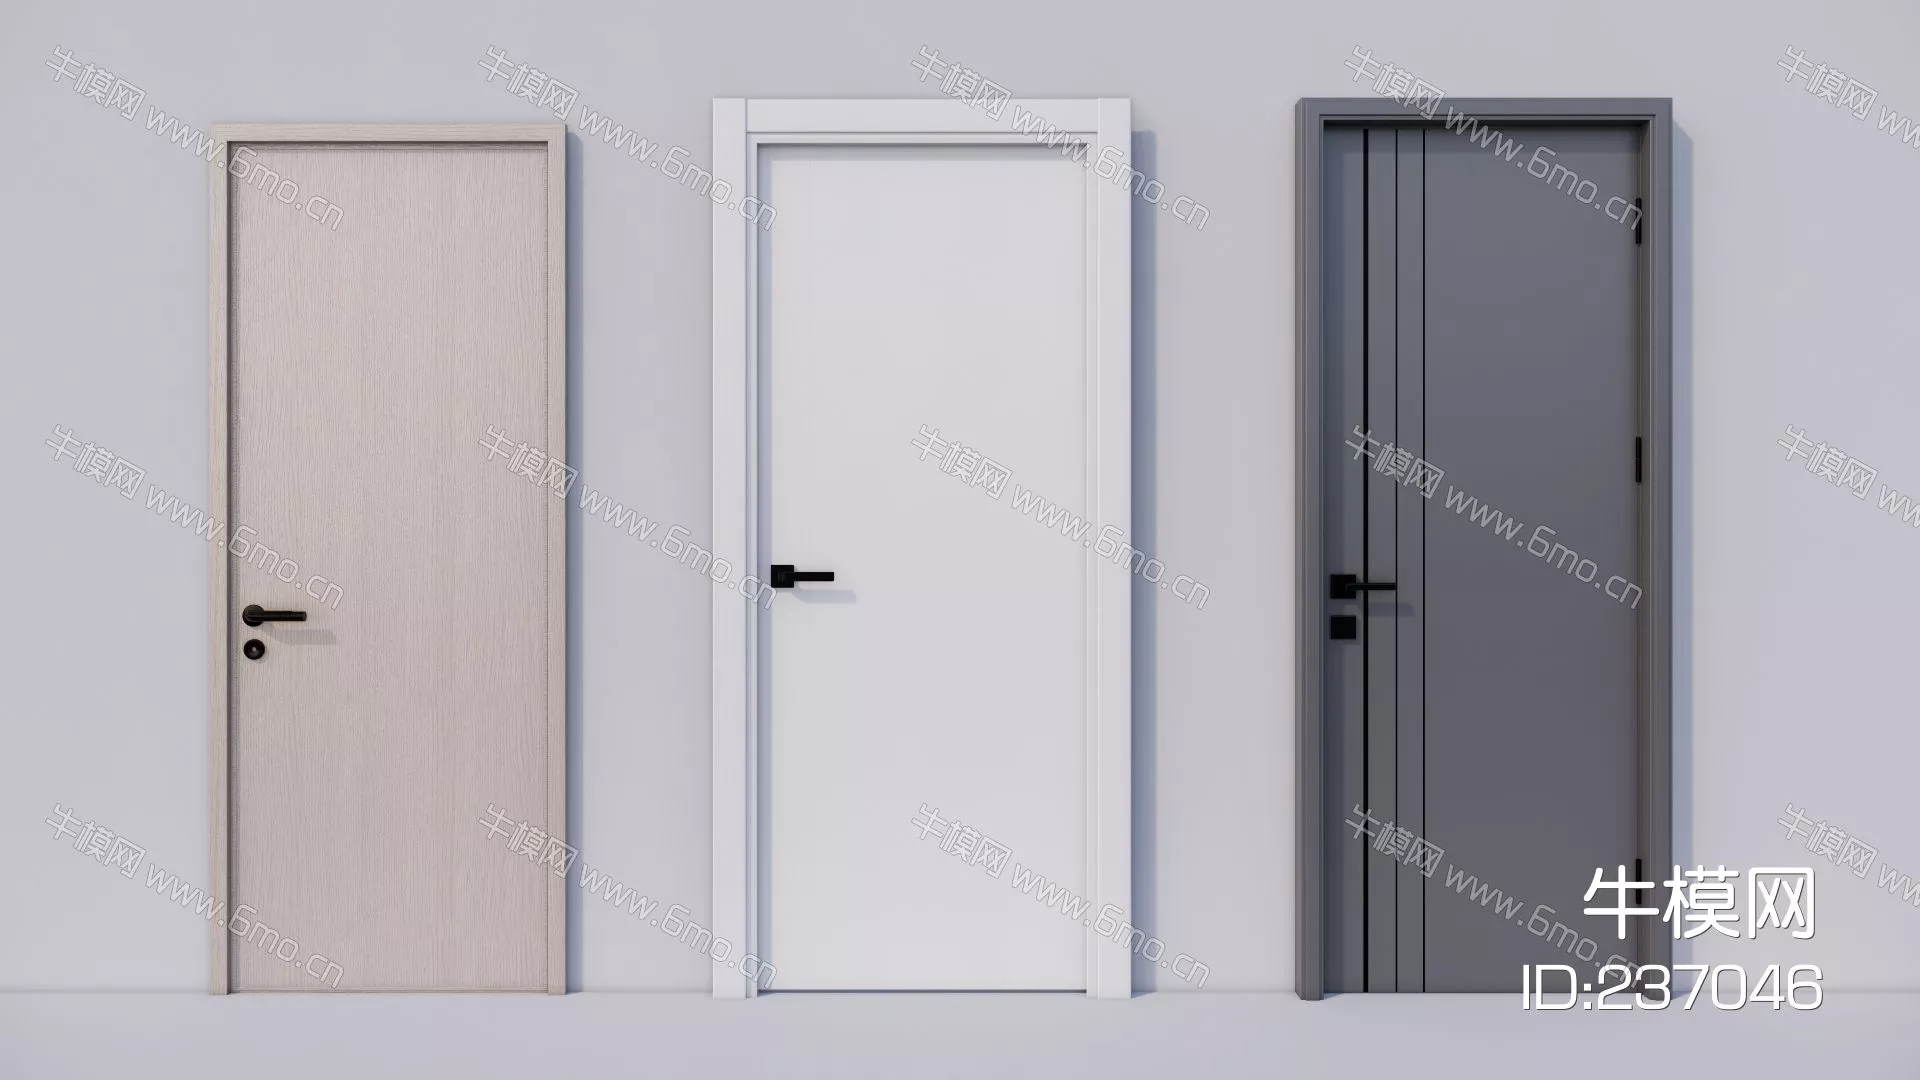 MODERN DOOR AND WINDOWS - SKETCHUP 3D MODEL - ENSCAPE - 237046